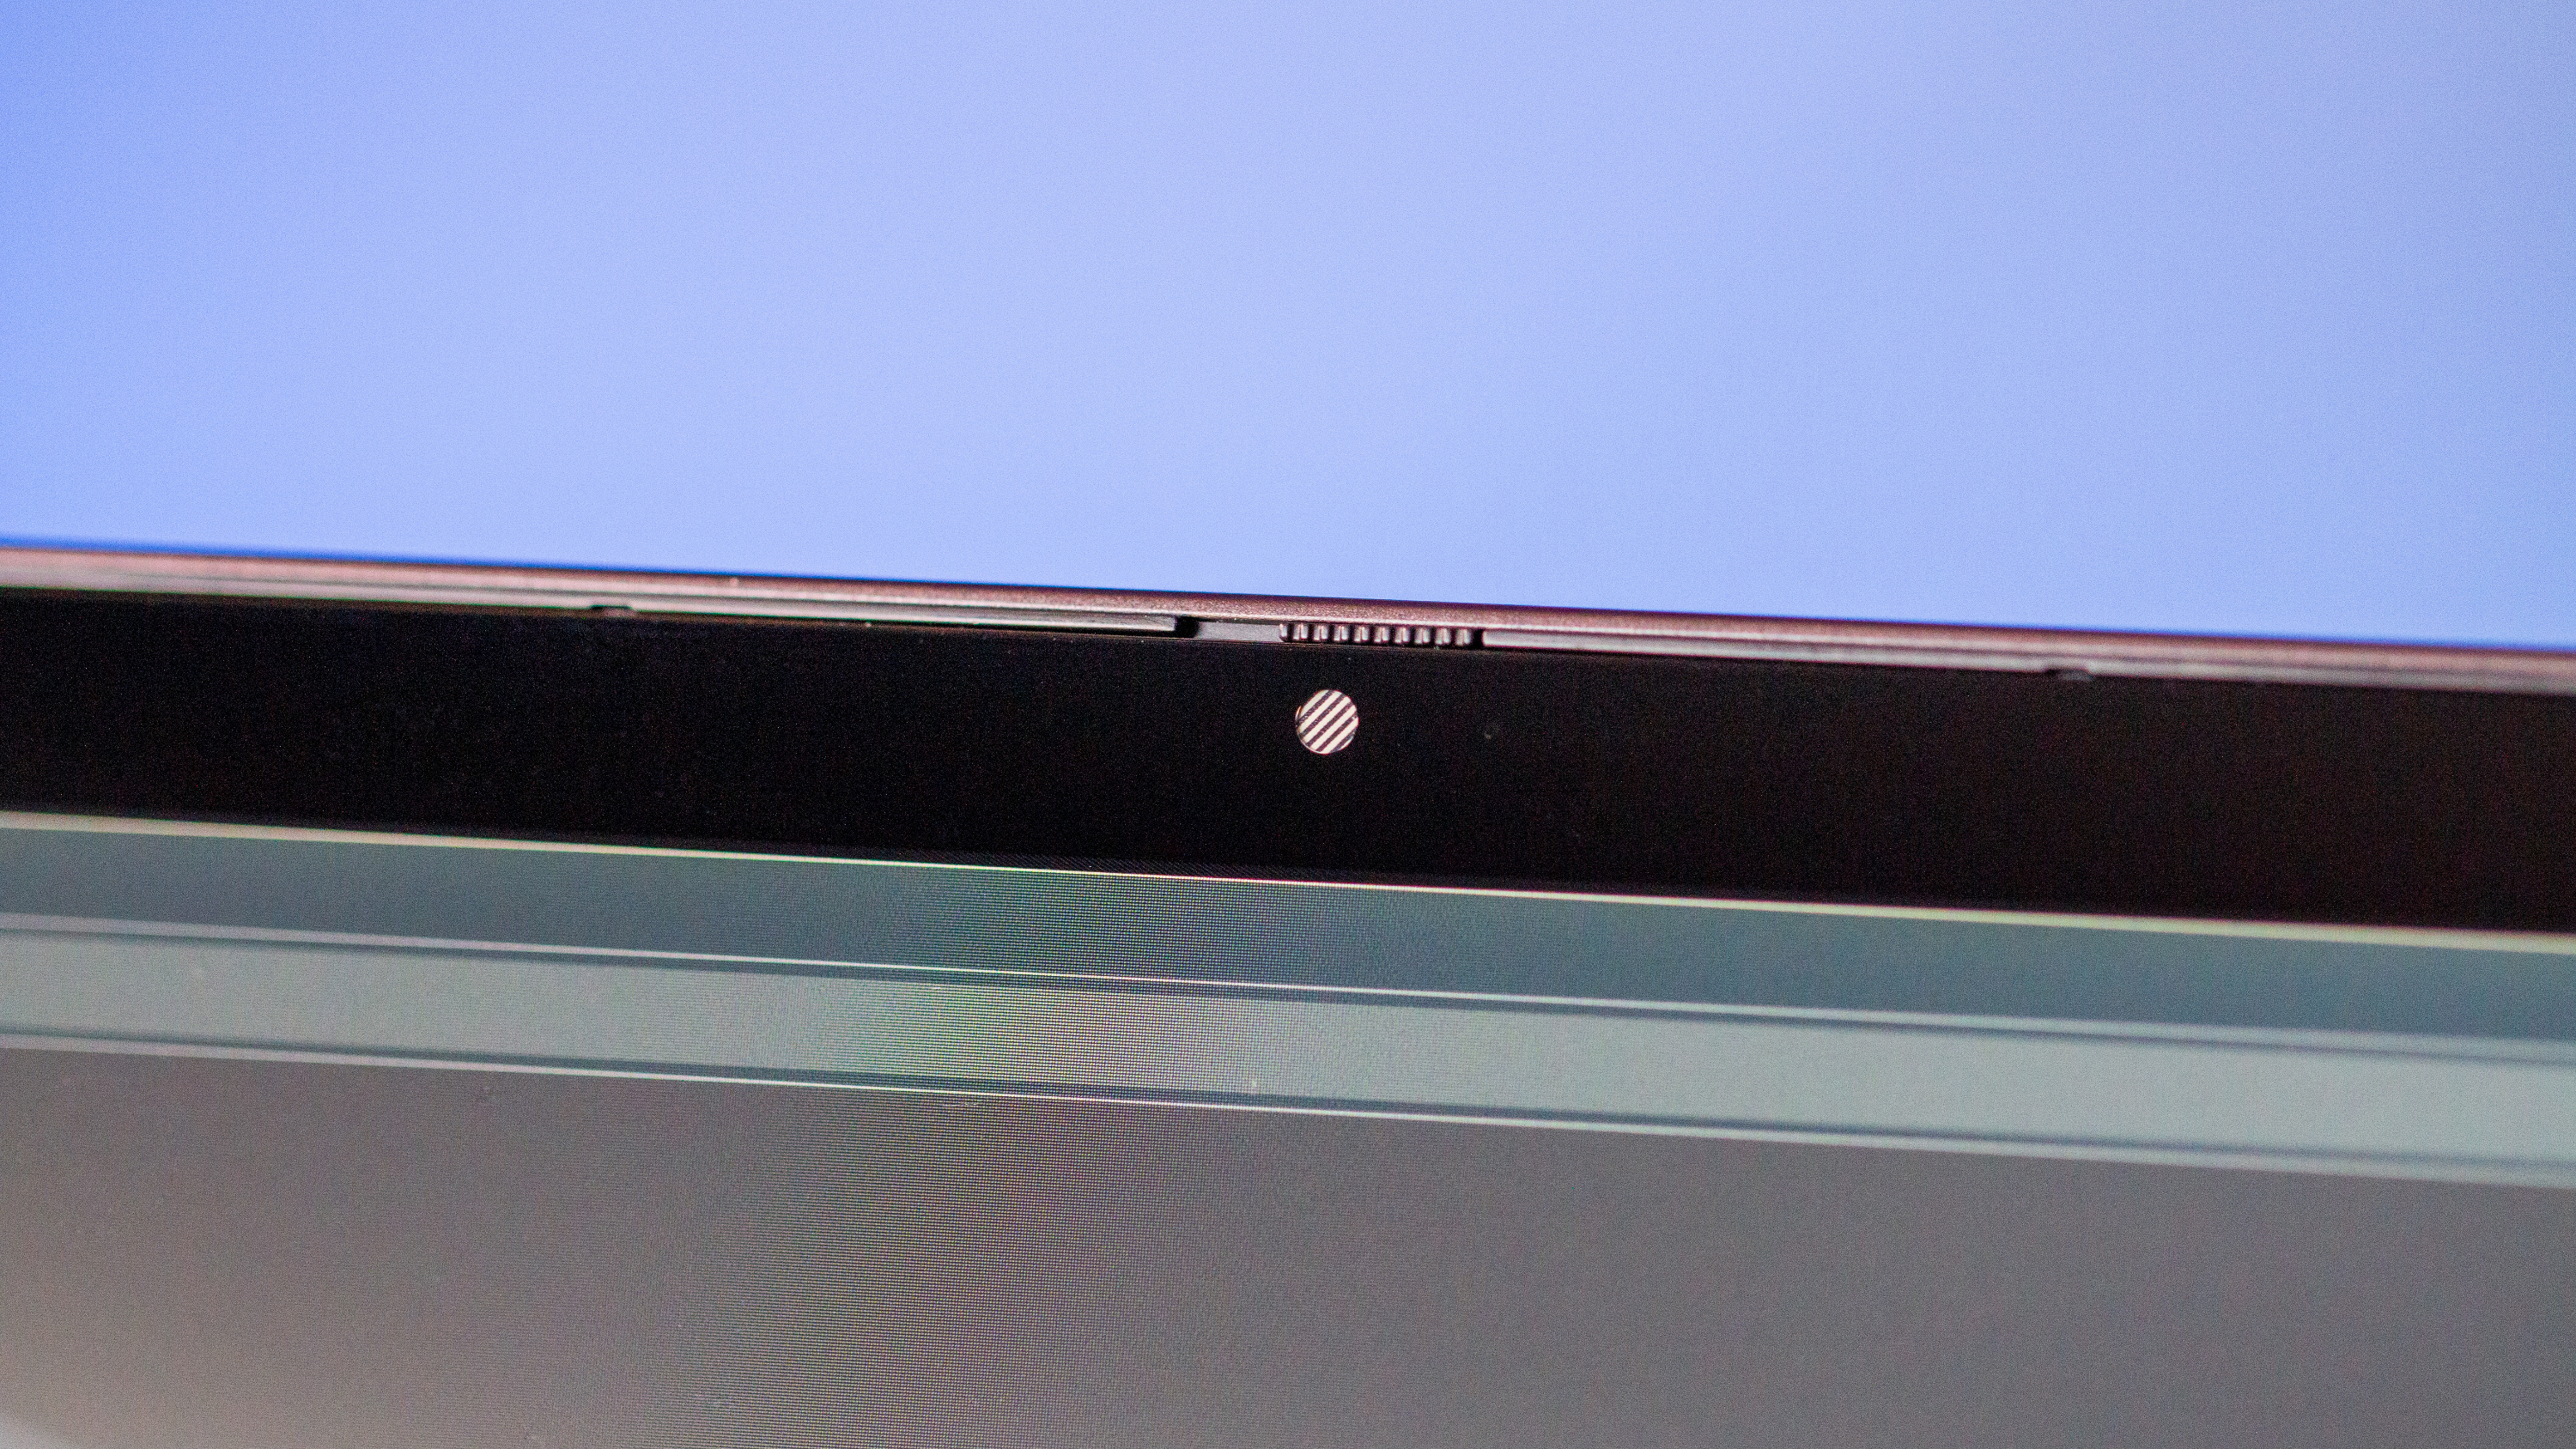 HP Chromebook x360 13b webcam shutter